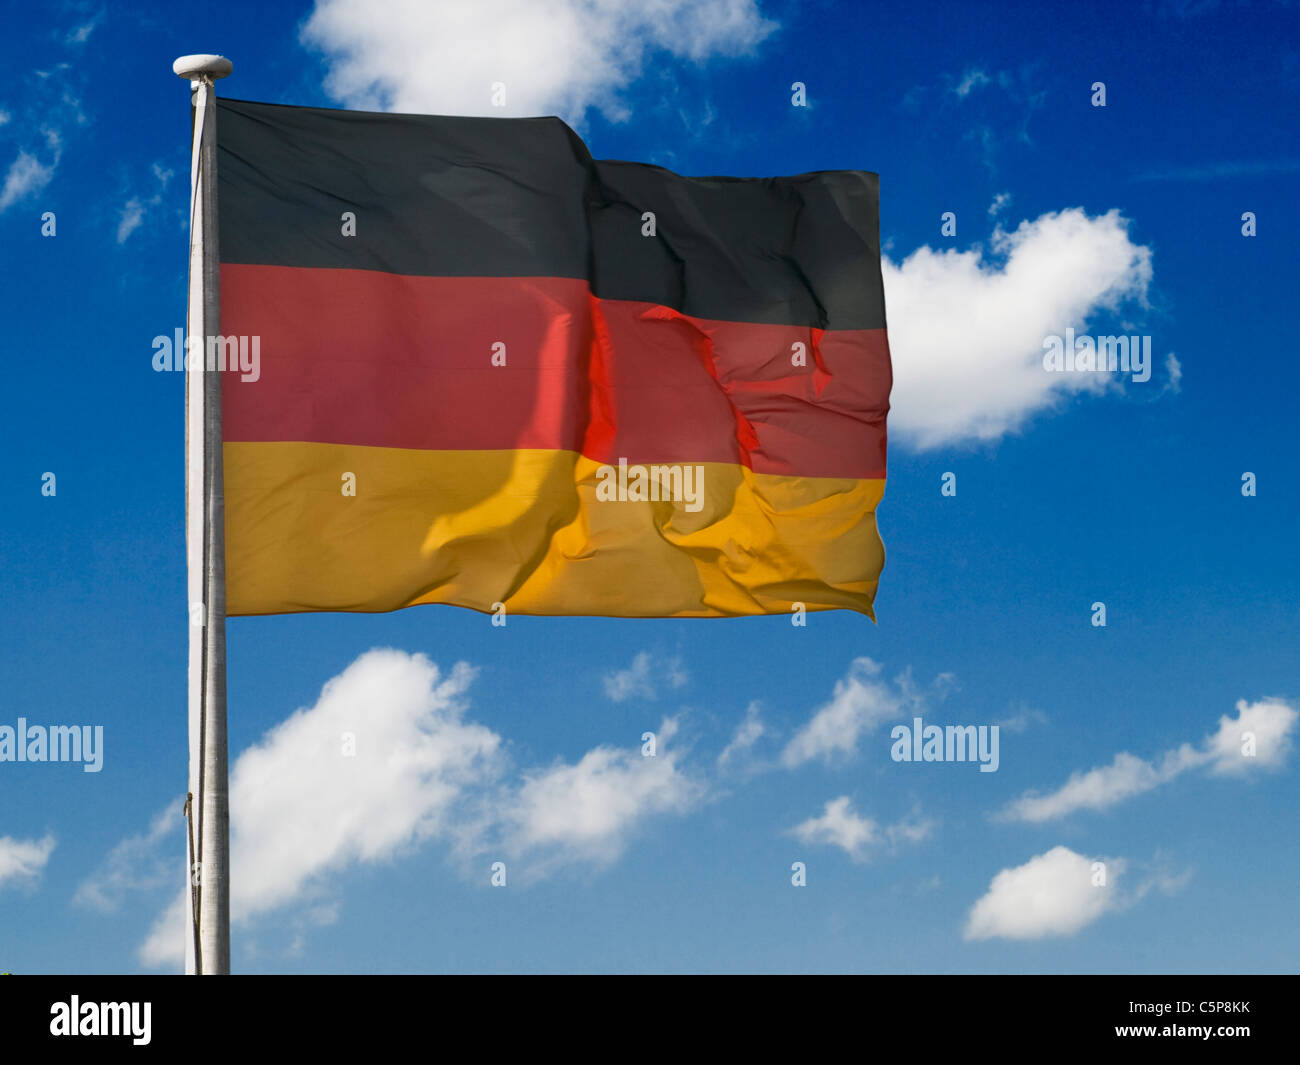 Detailansicht einer Flagge der Bundesrepublik Deutschland | Dettaglio Foto di bandiera della Repubblica federale di Germania Foto Stock